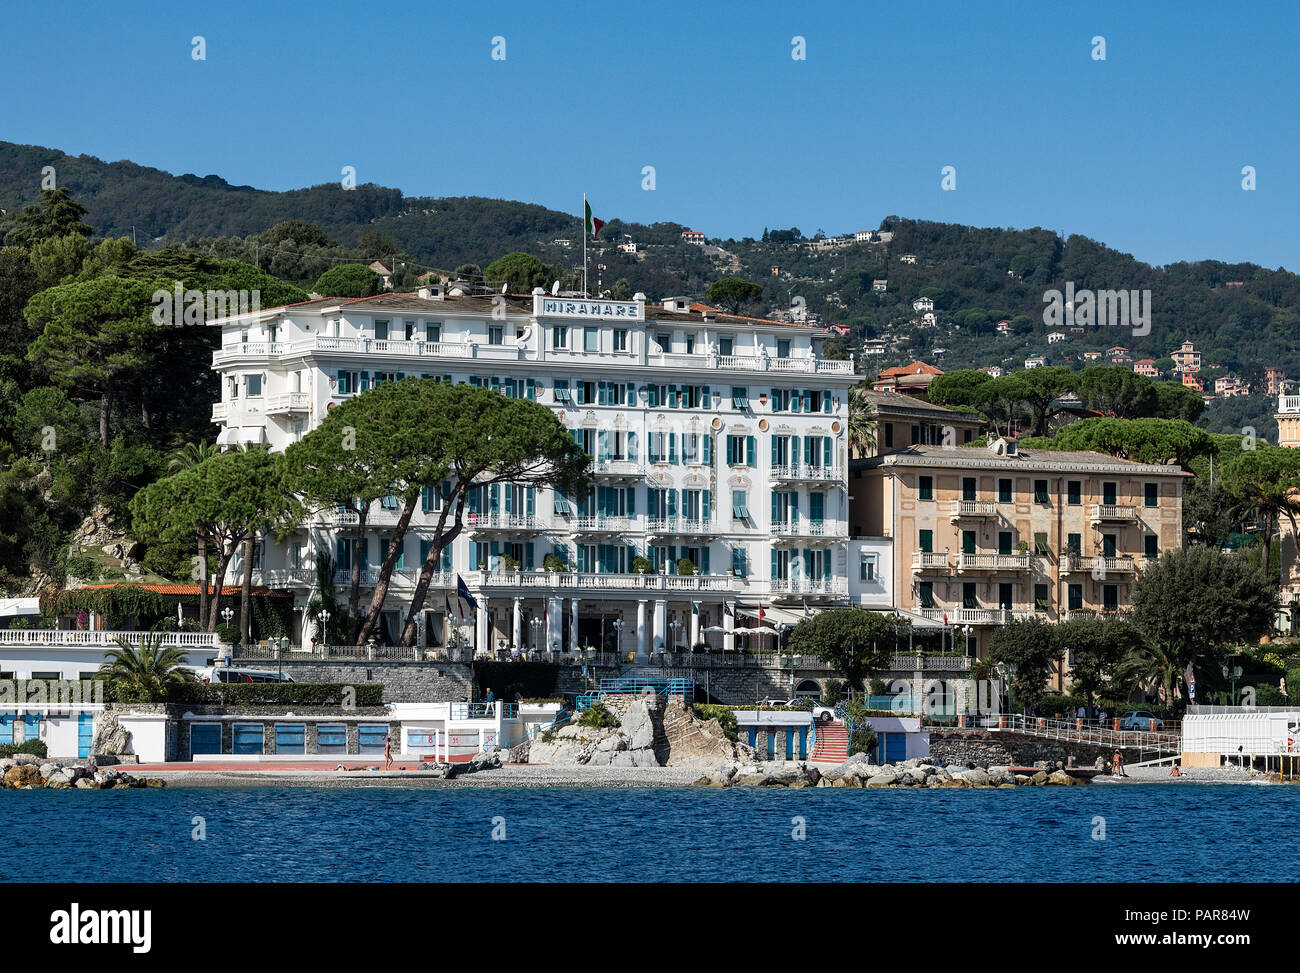 Grand Hotel Miramare, Santa Margherita Ligure, Liguria, Italy. Stock Photo